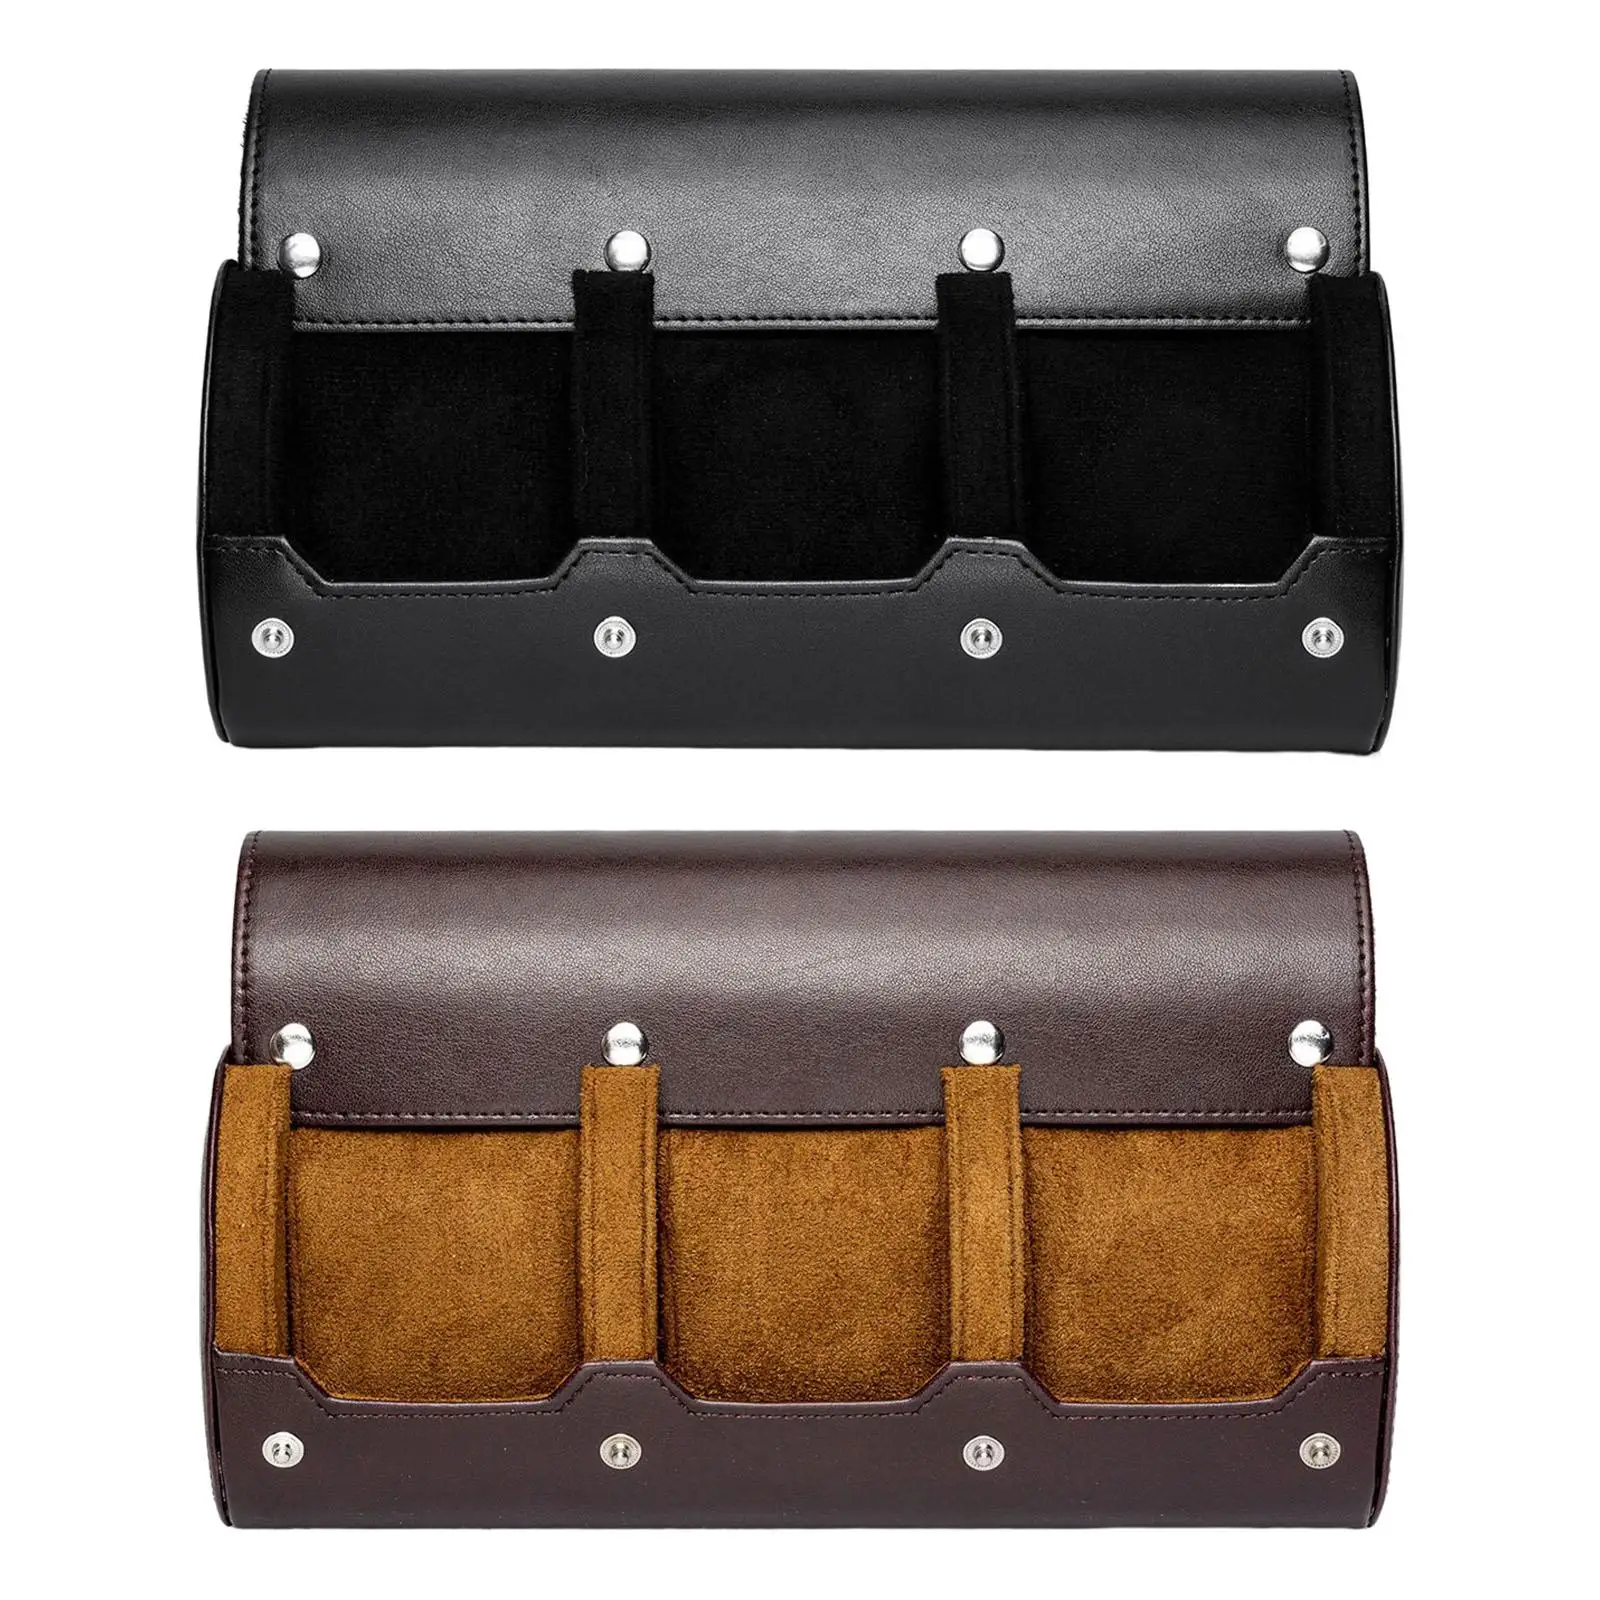 3 Slots  for  Wristwatch Holder Jewelry Bracelet  Display Leather  Storage Case